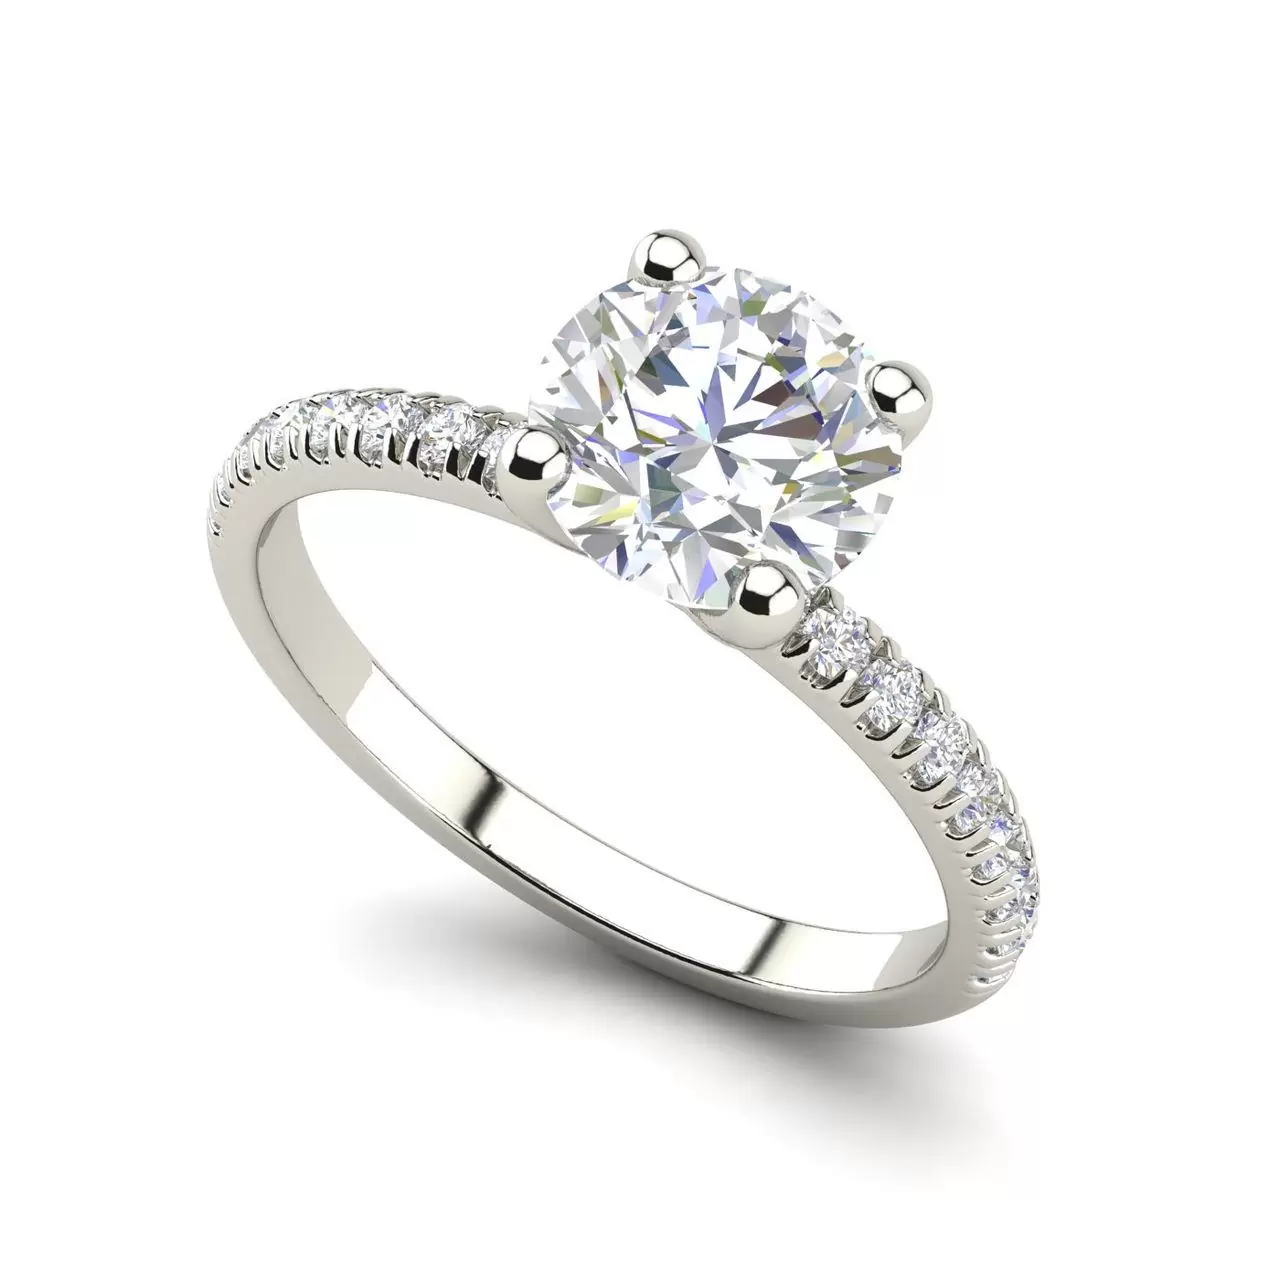 Pave Flush Fit 1.35 Carat Round Cut Diamond Engagement Ring